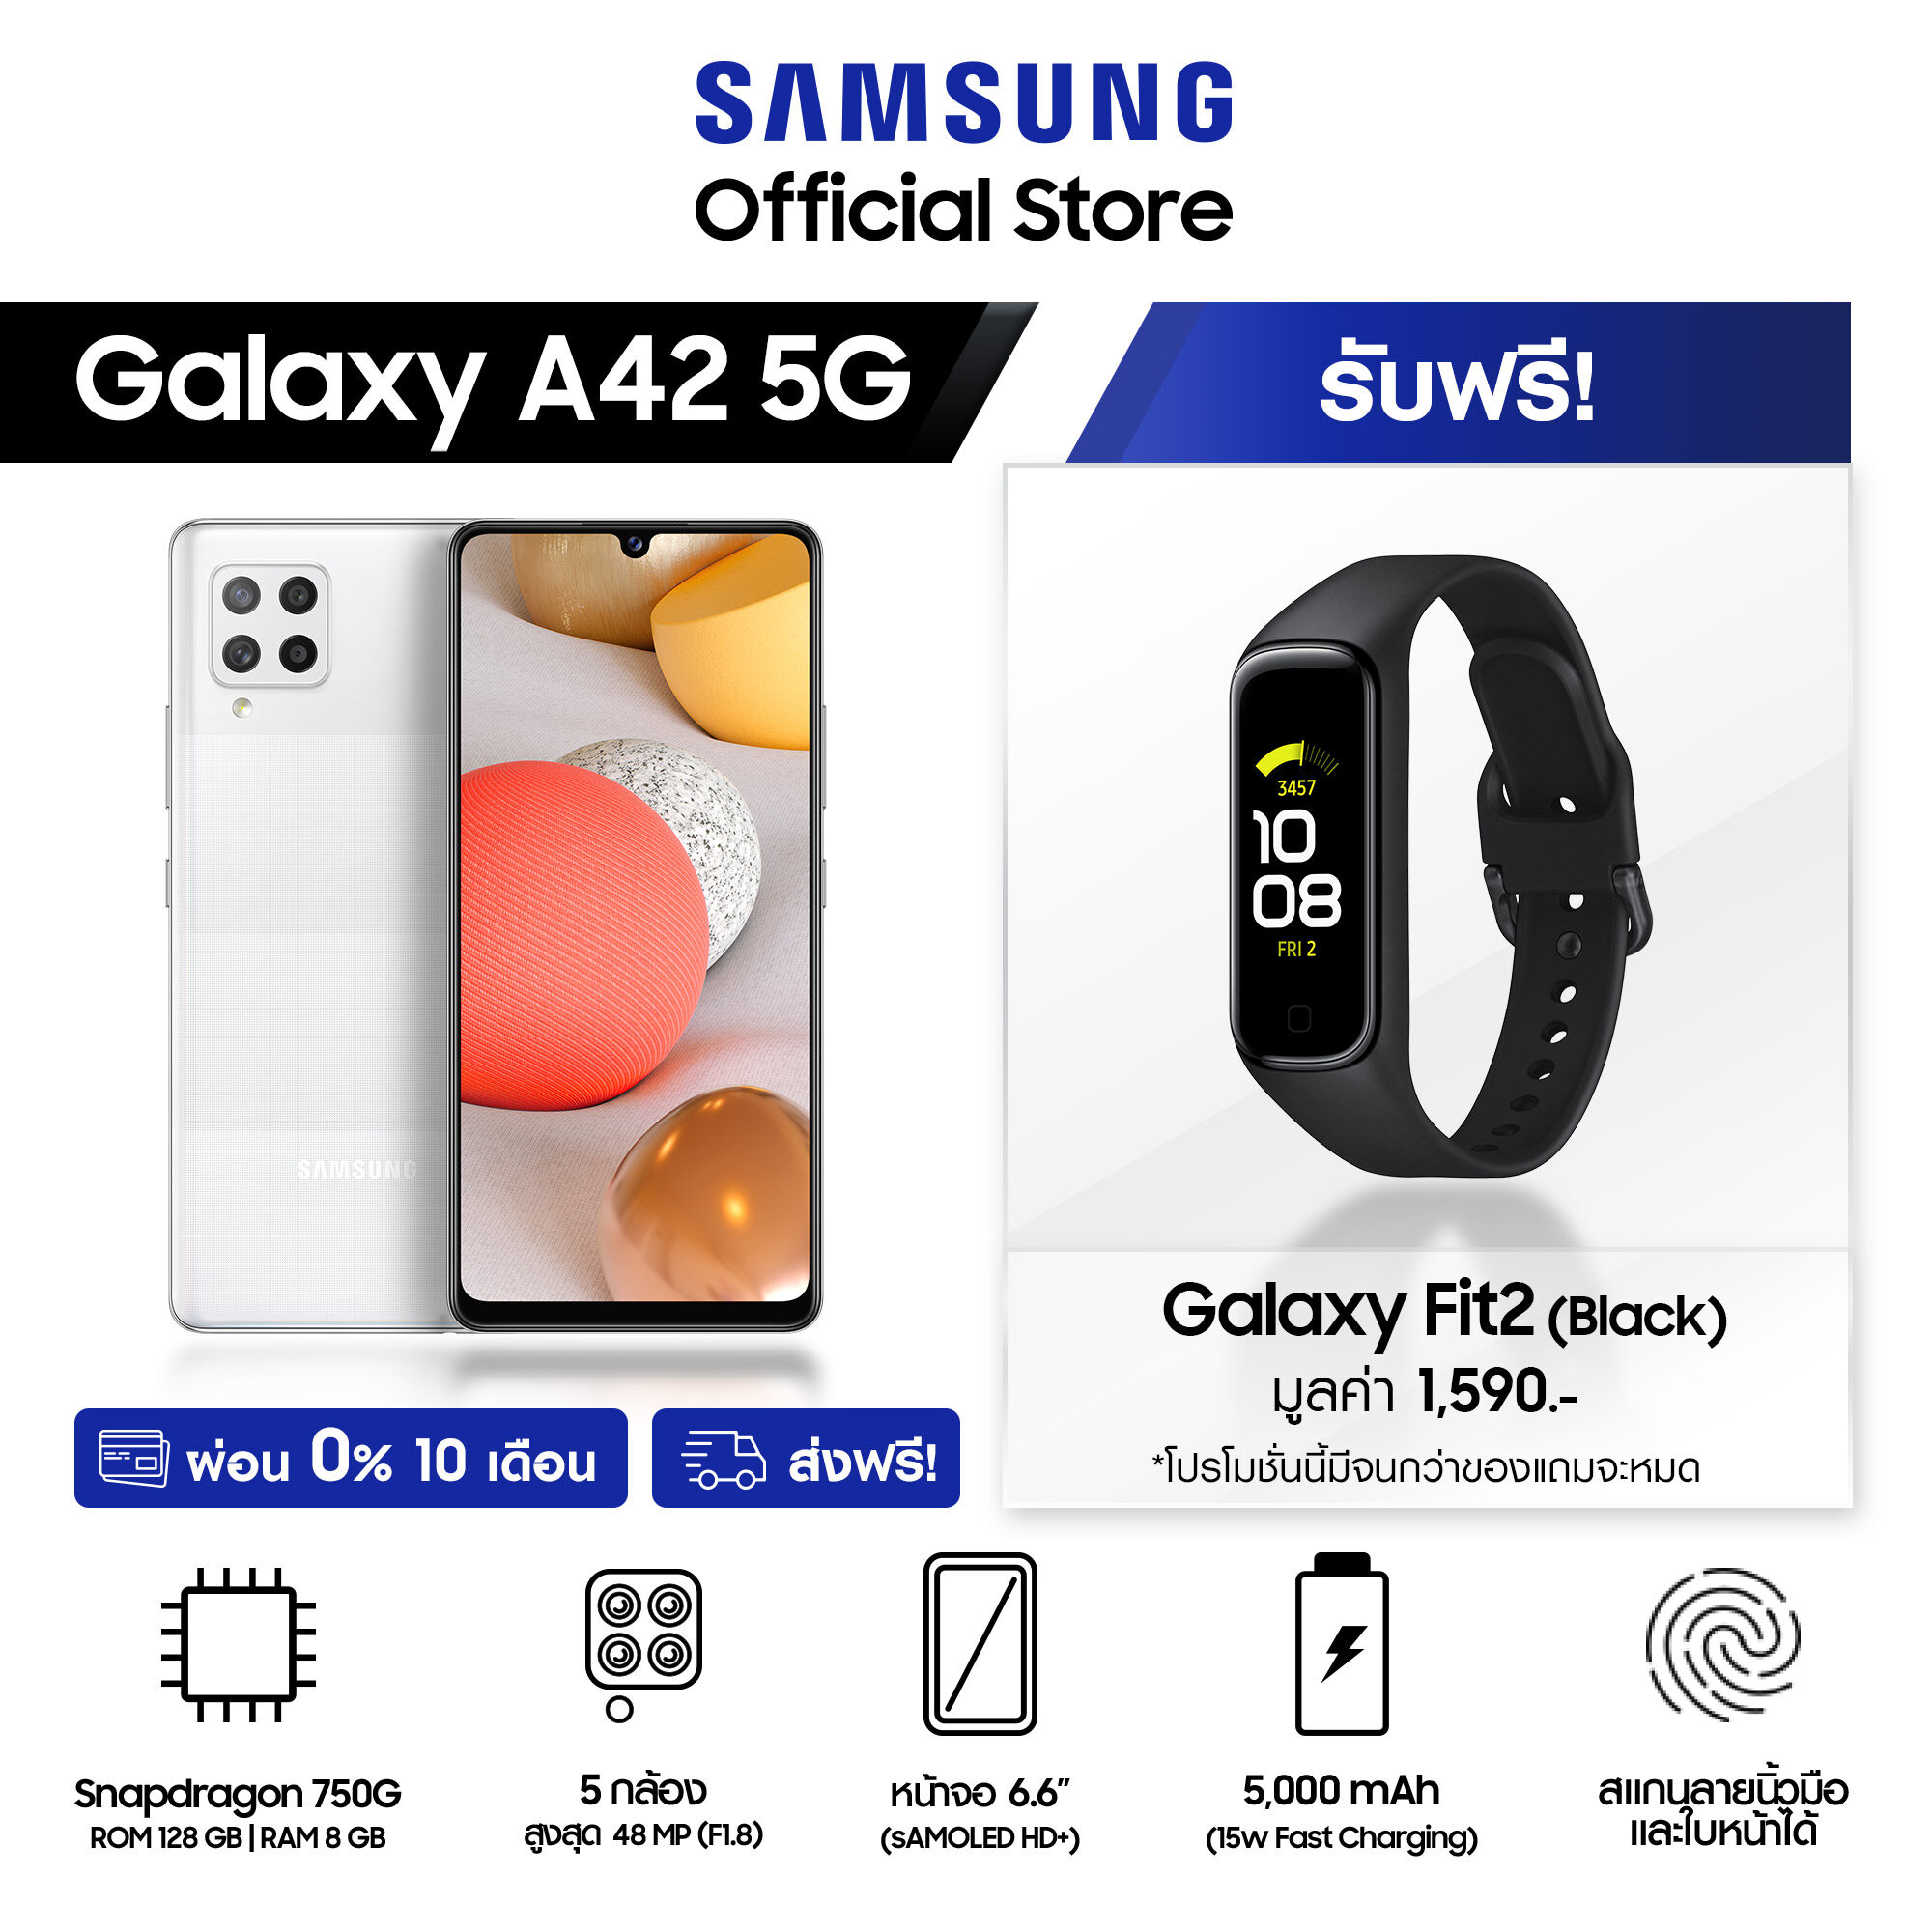 Samsung Galaxy A42 5G 8/128 GB แถมฟรี Samsung Galaxy Fit2-Black มูลค่า 1,590 เริ่มจัดส่งวันที่ 17 พฤศจิกายน 63 เป็นต้นไป